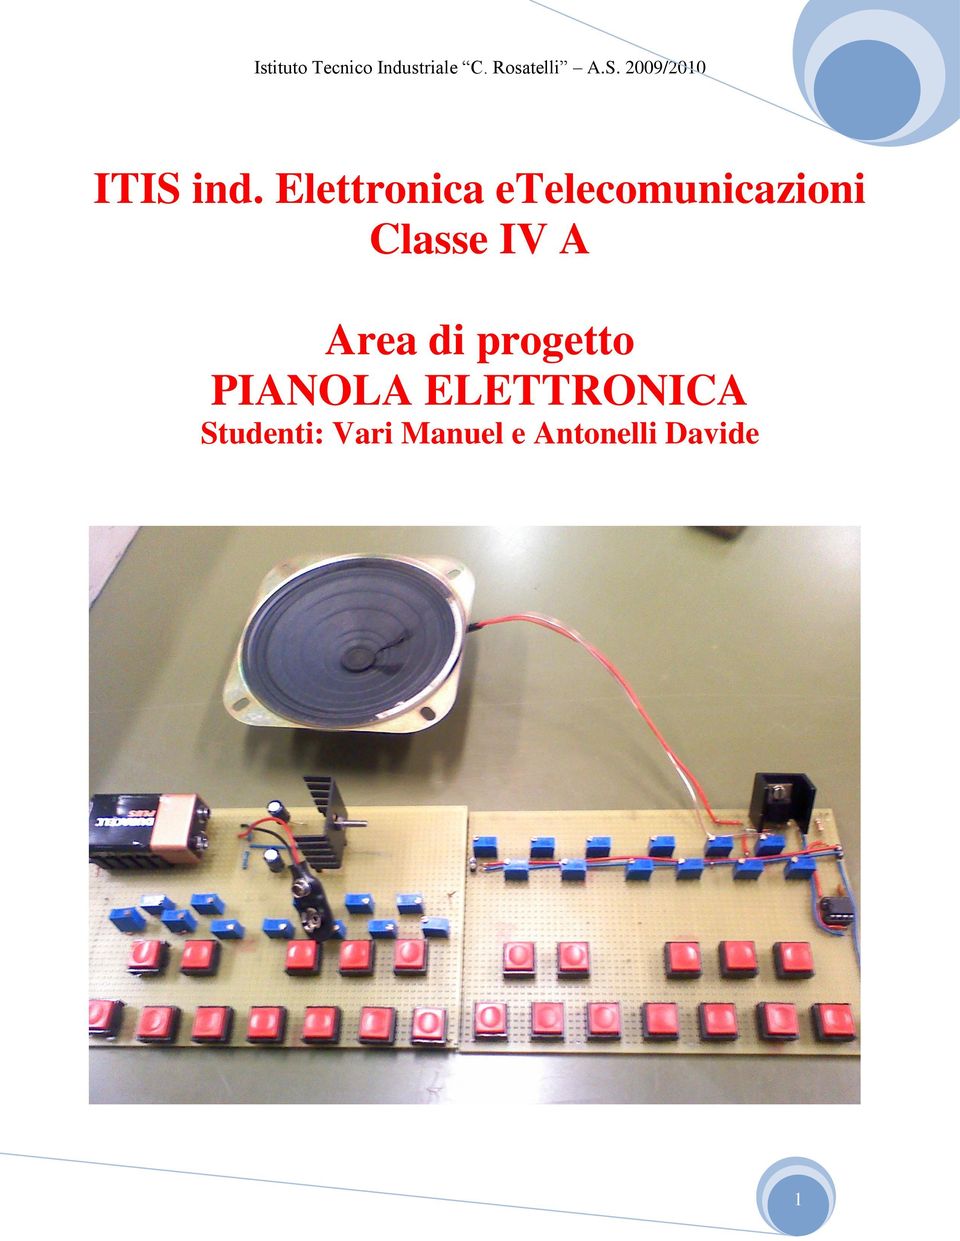 Elettronica etelecomunicazioni Classe IV A